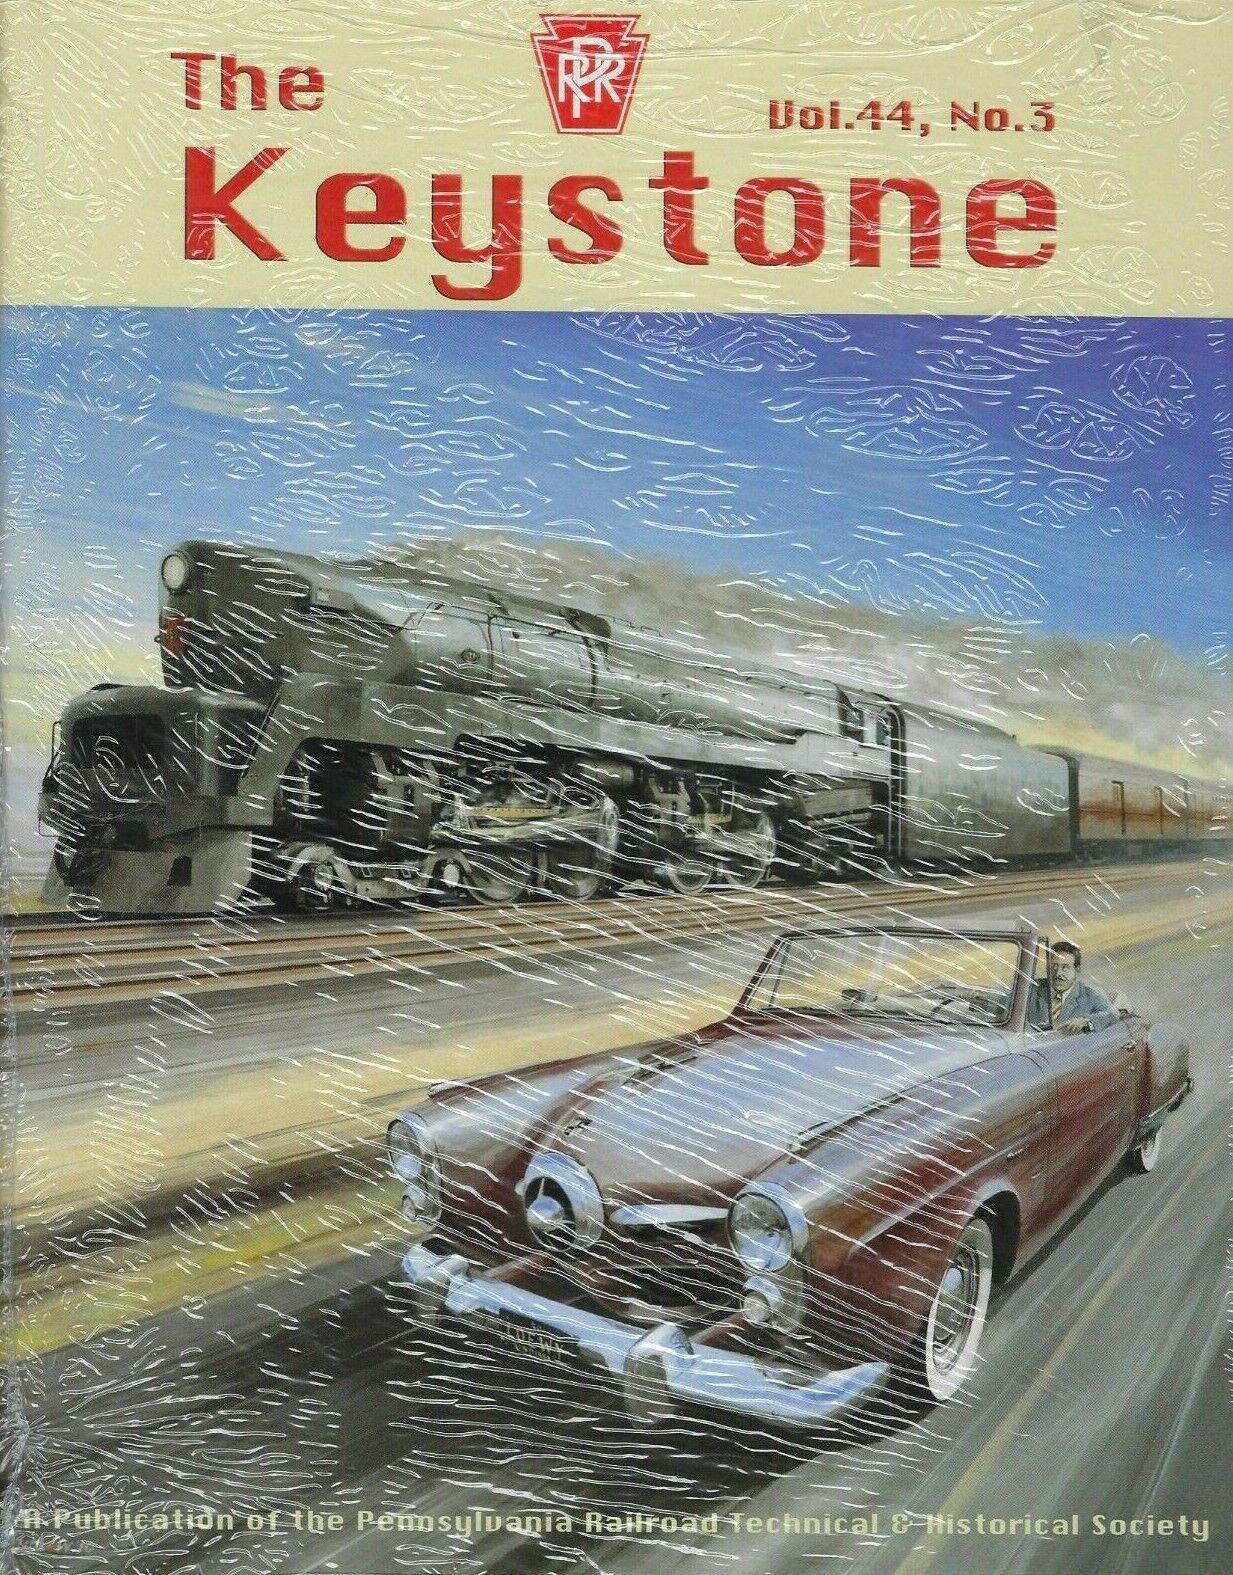 The Keystone, PRR Publication, Autumn 2011, Vol. 44, No. 3 - (LAST BRAND NEW)